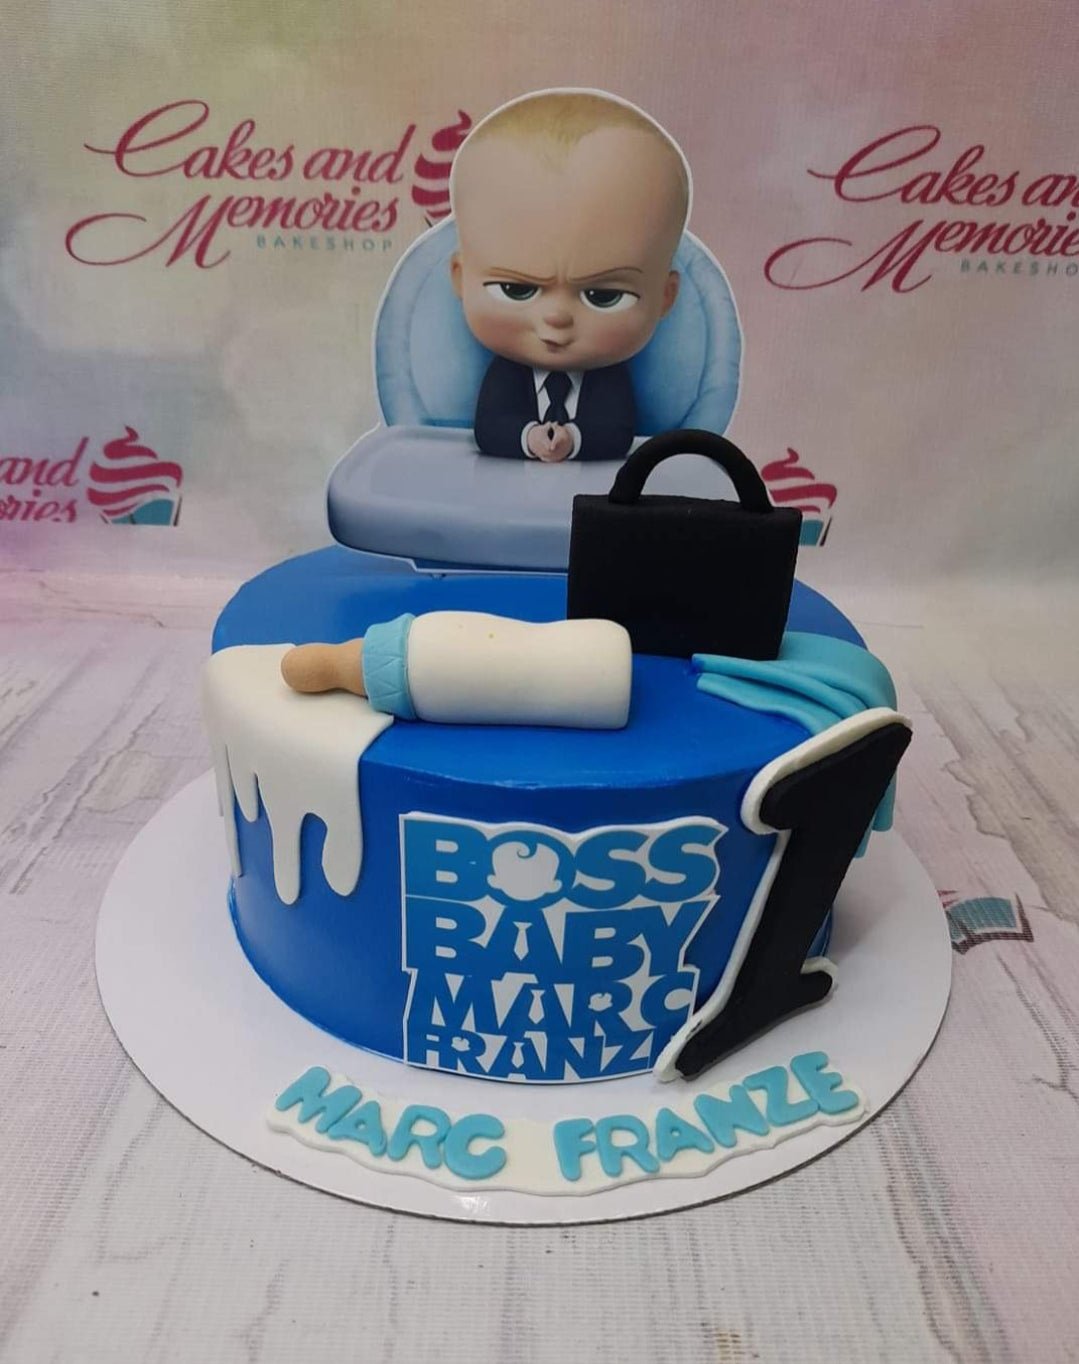 Boss Fondant Cake - Cakerica